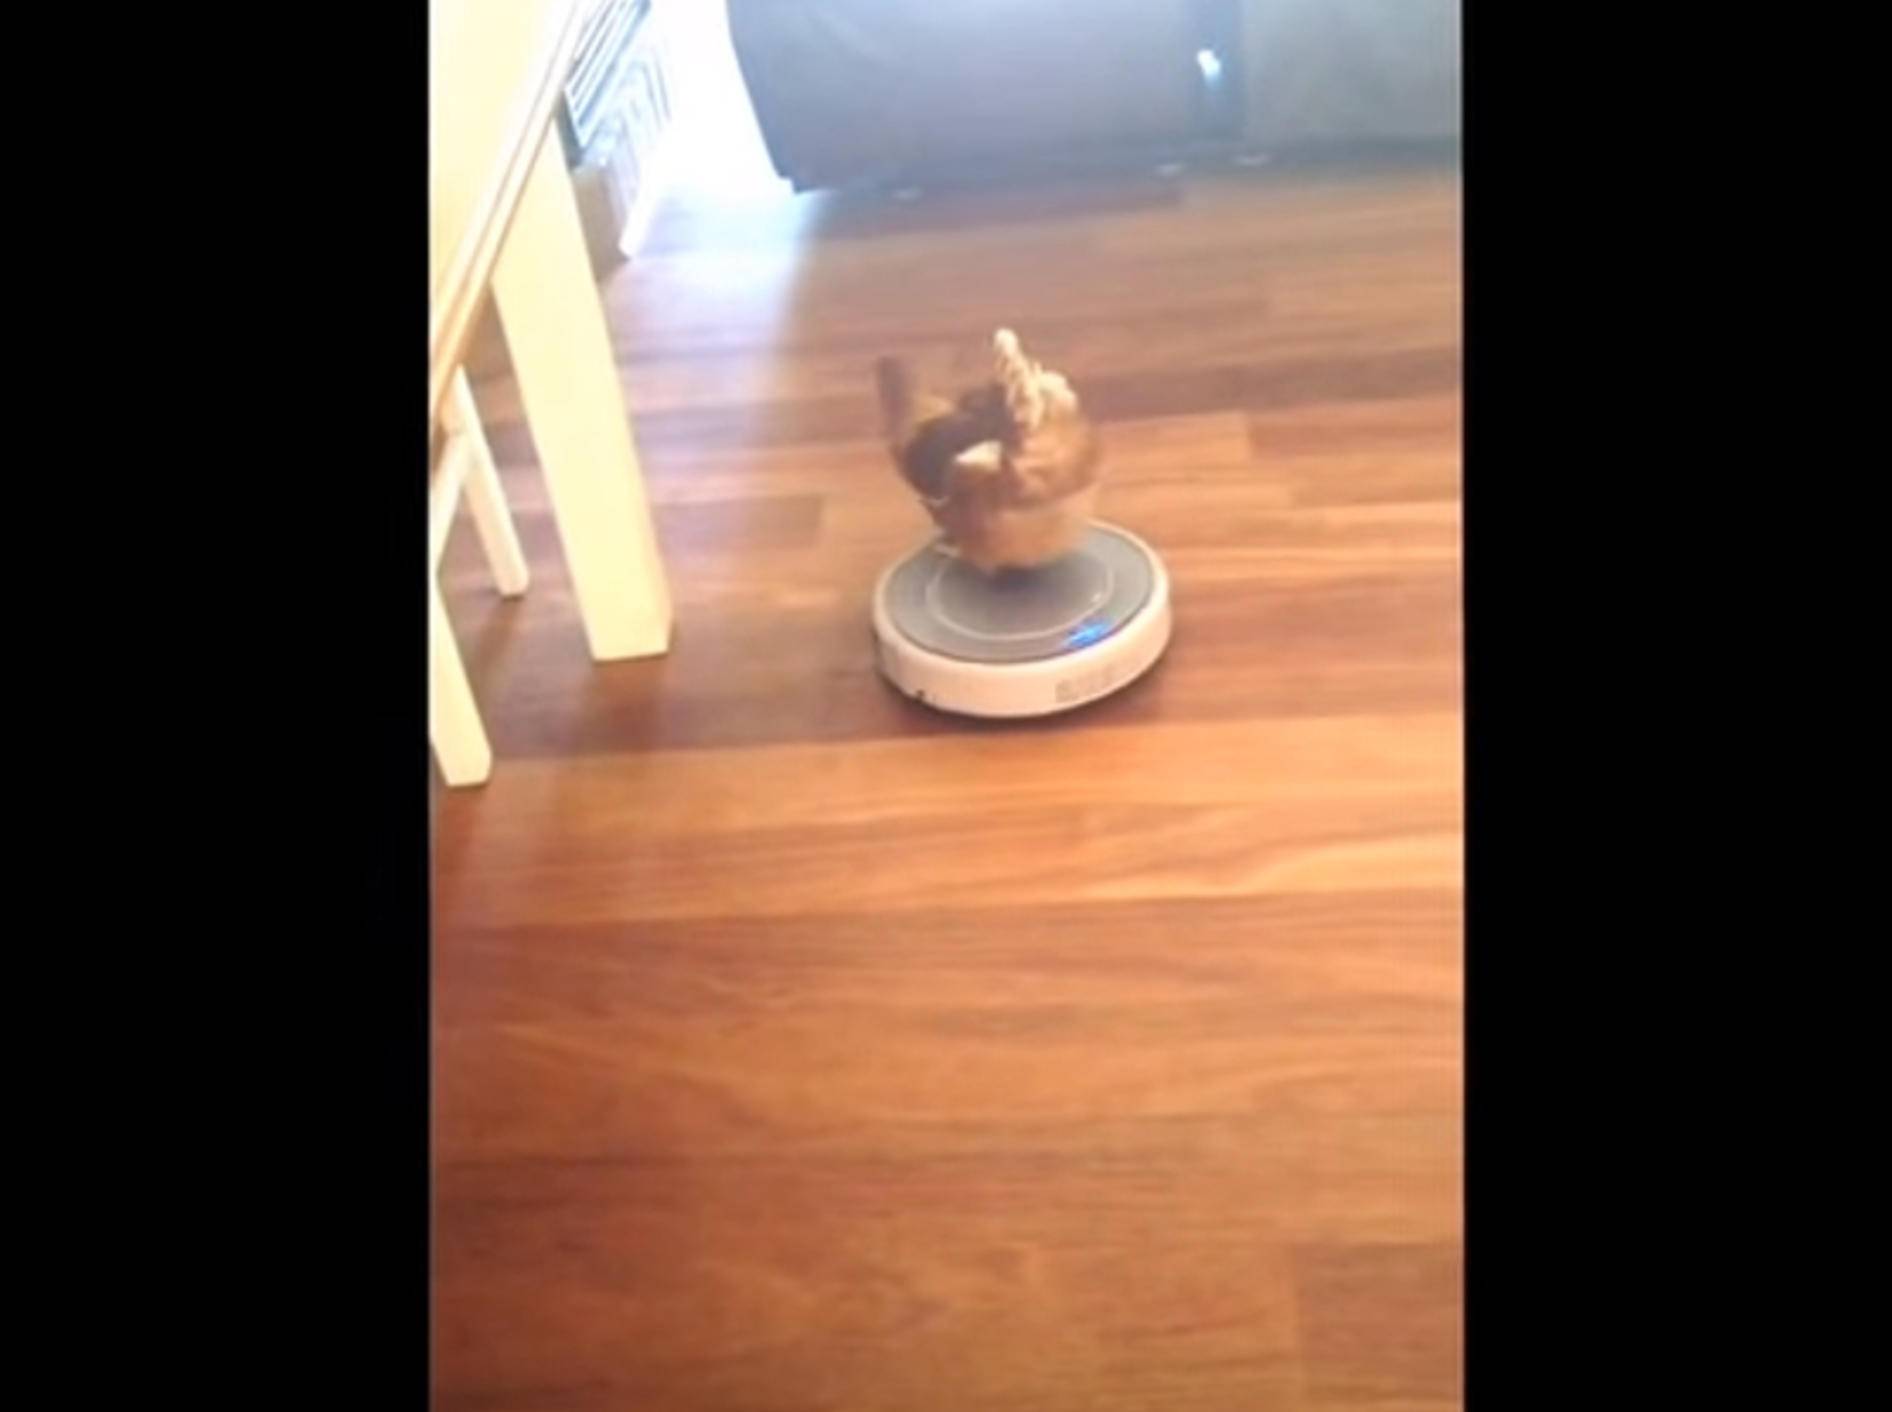 Huhn fährt auf Staubsauger-Roboter umher – Bild: YouTube / Mythreeboysandi